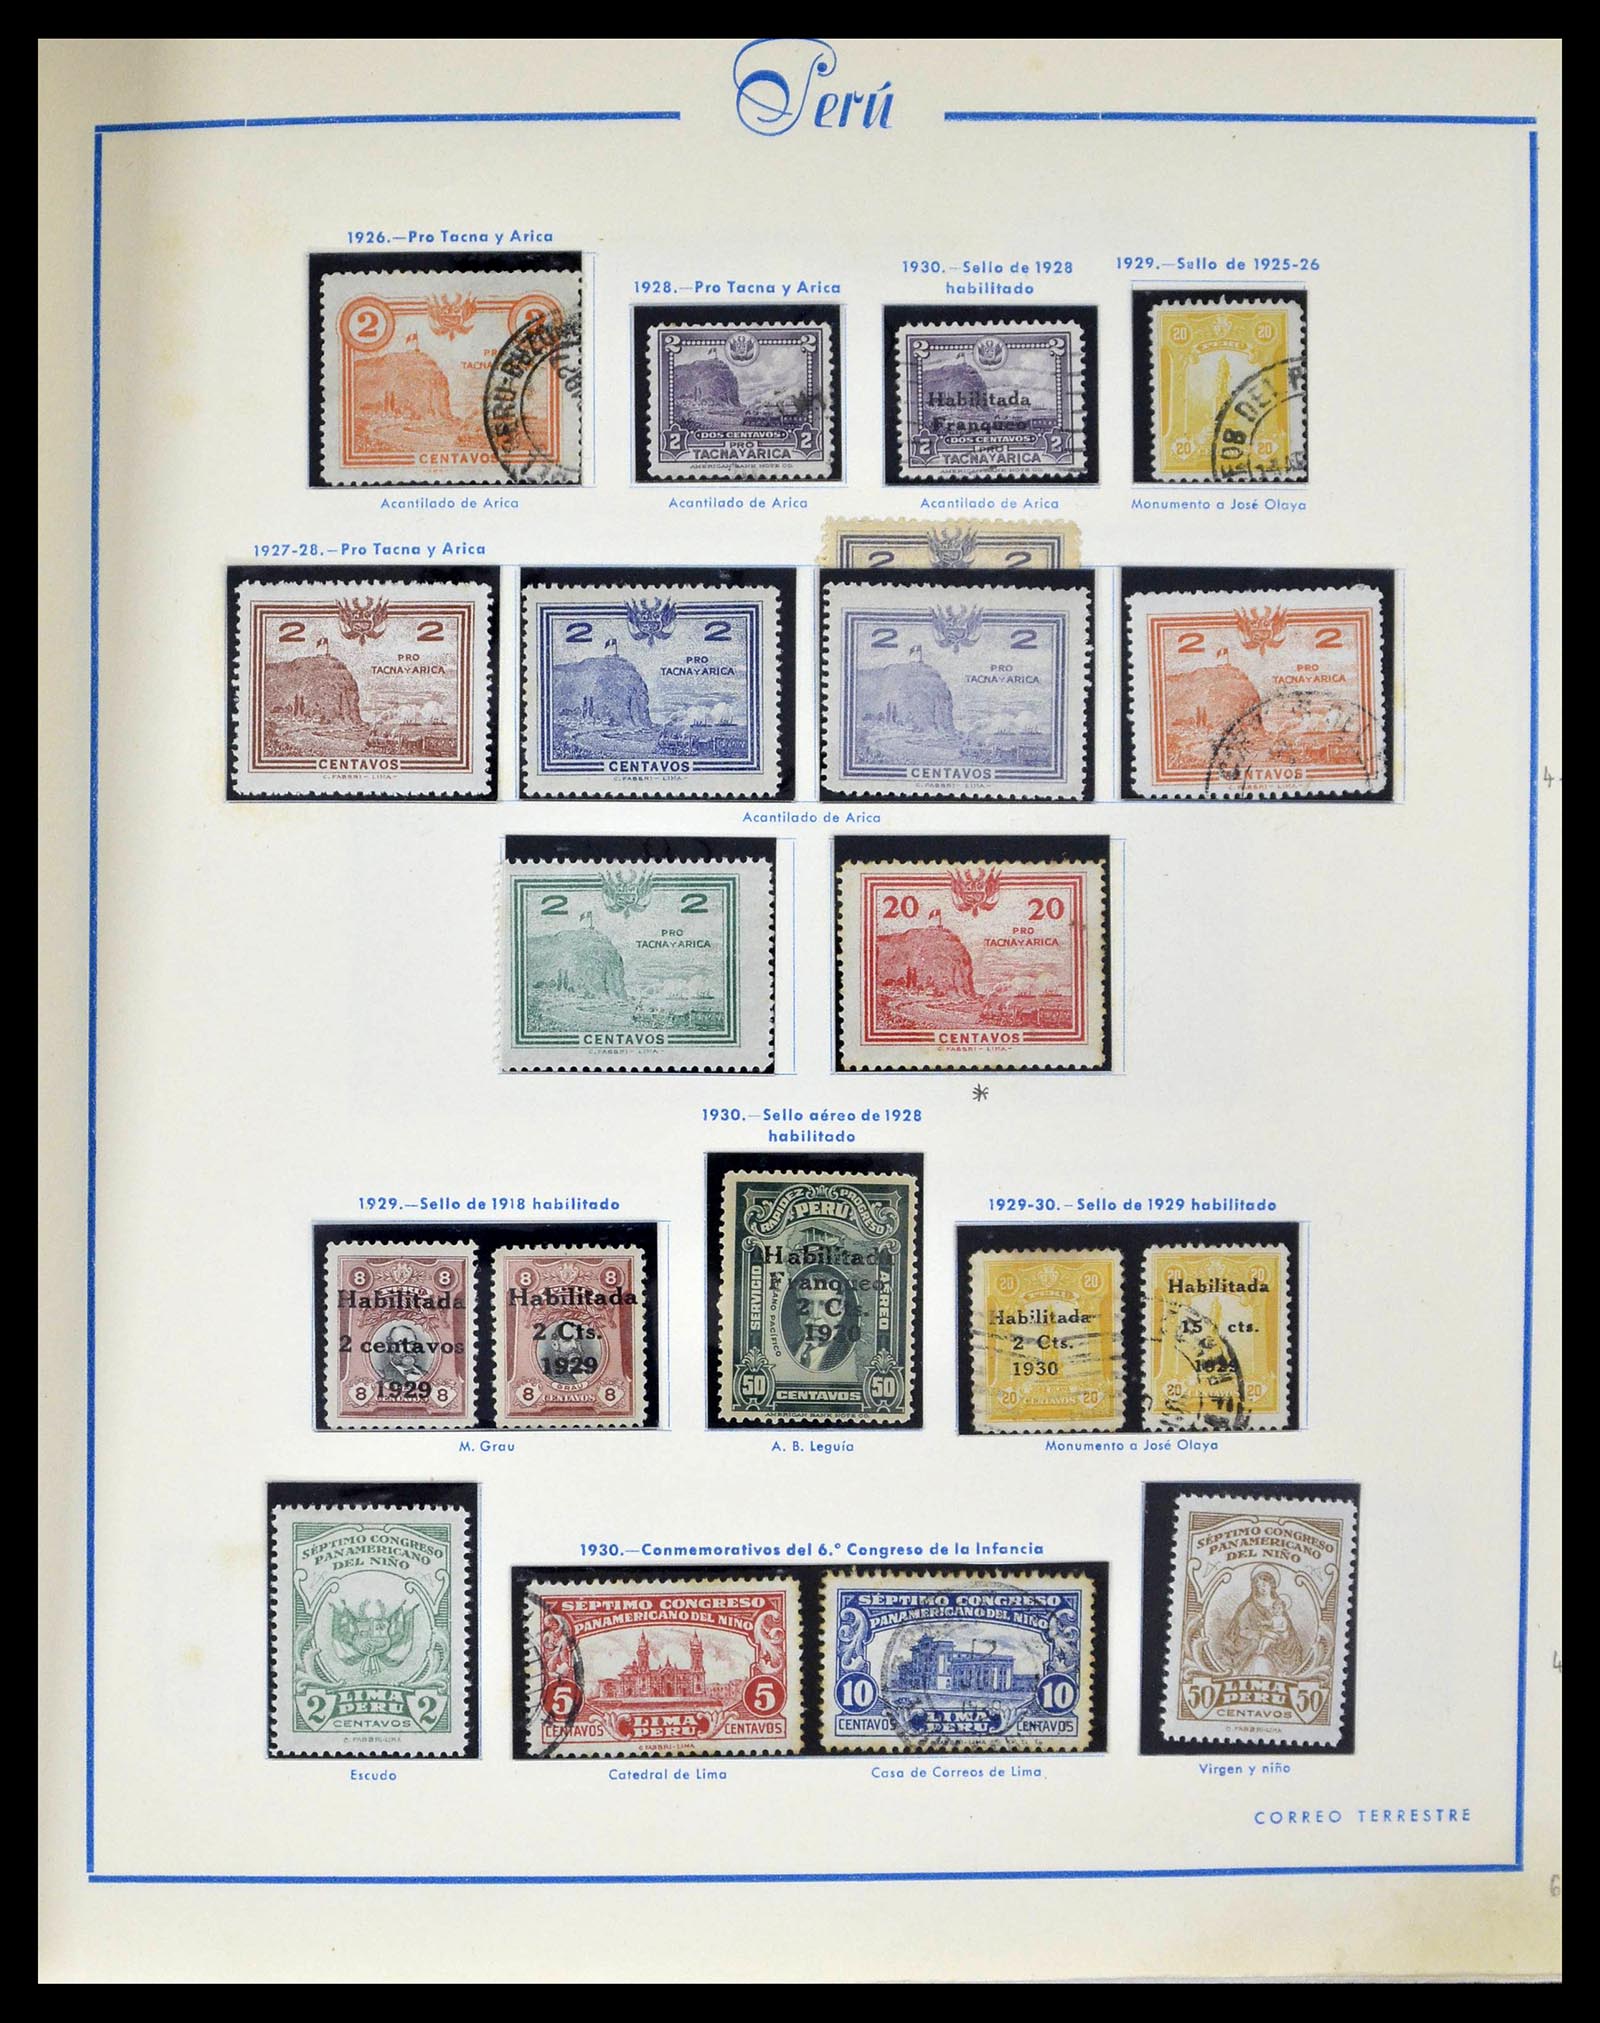 39214 0013 - Stamp collection 39214 Peru 1857-1981.